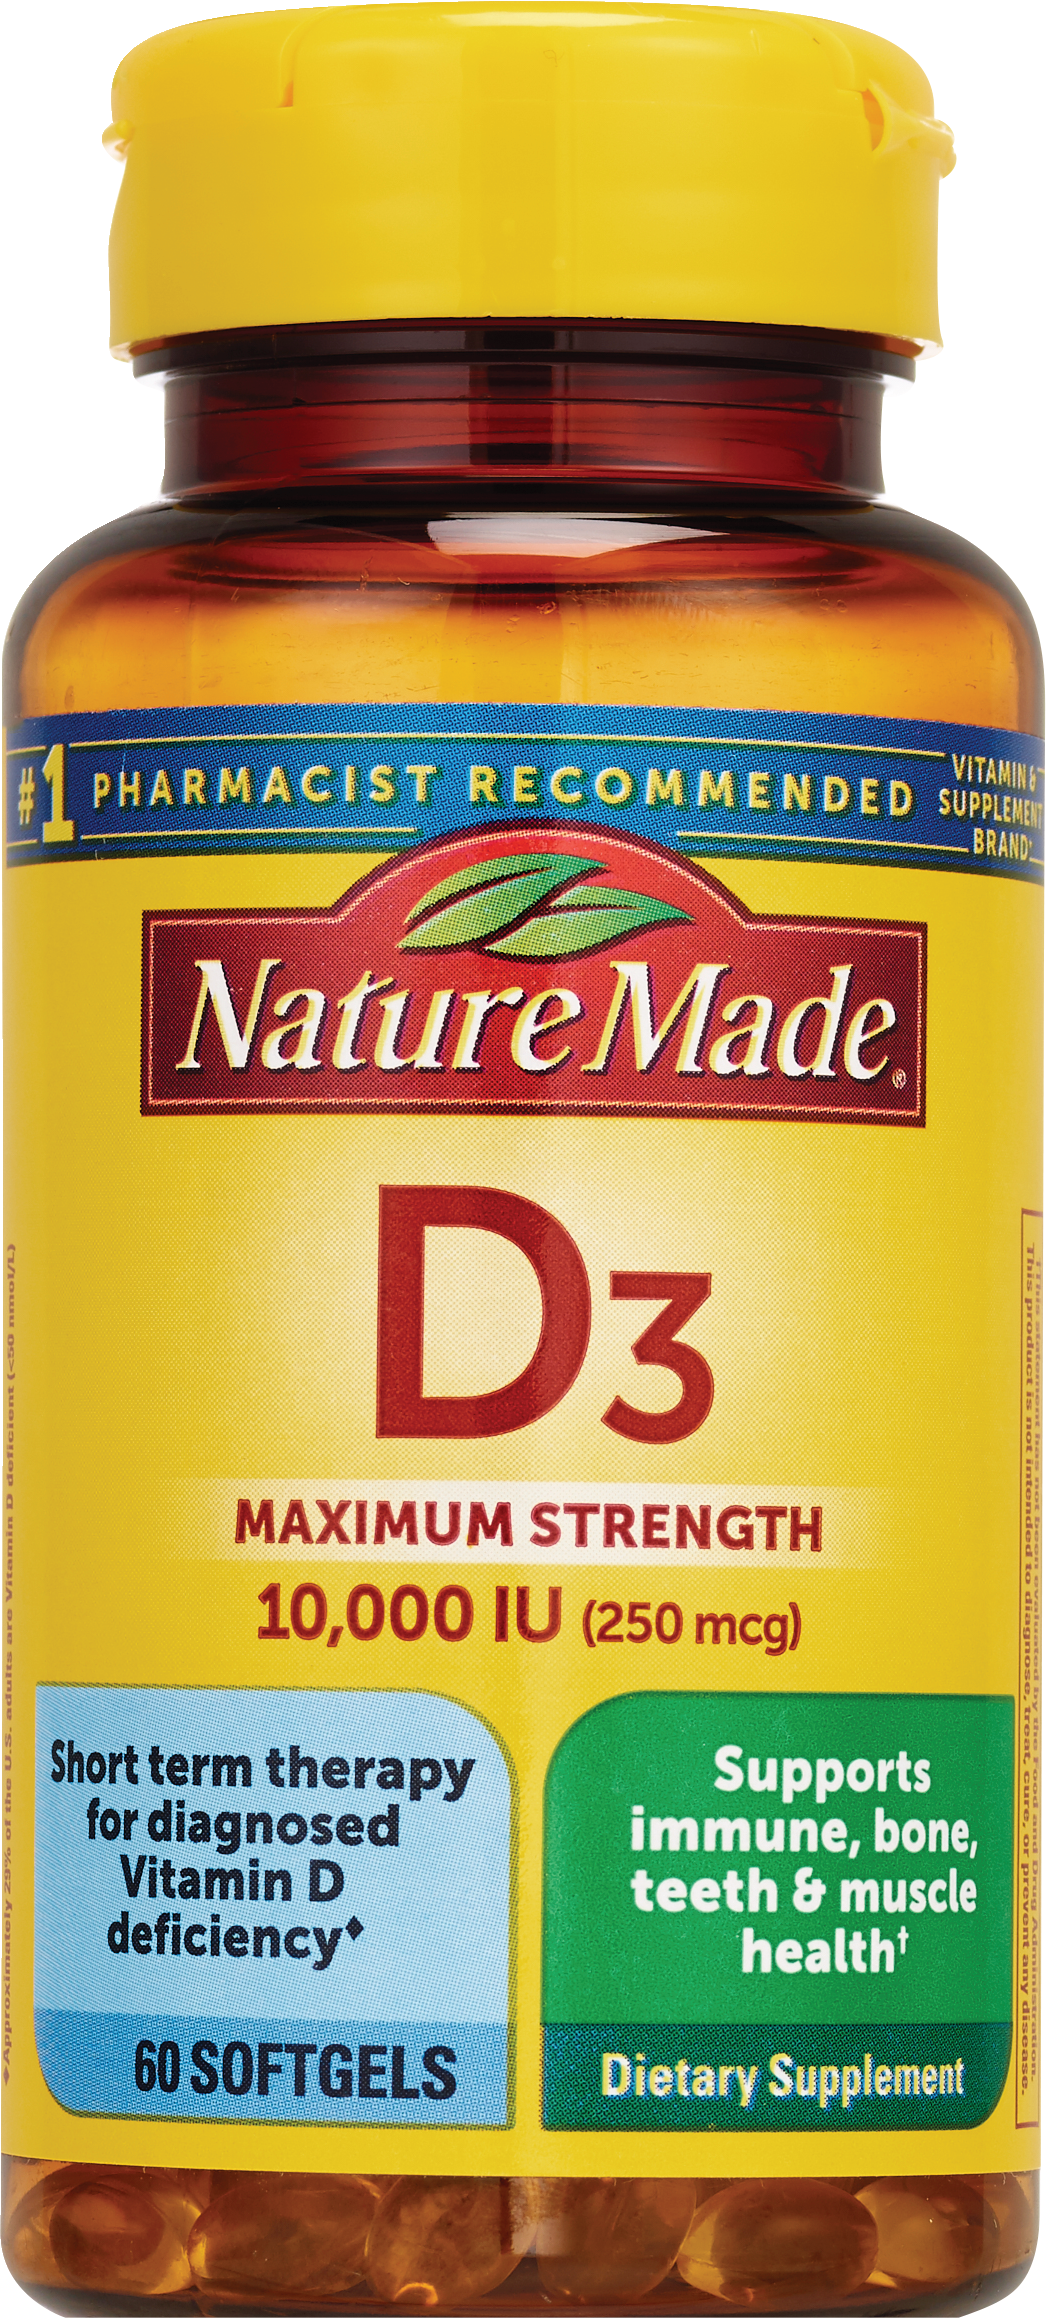 Nature Made Vitamin D3 Maximum Strength Softgels